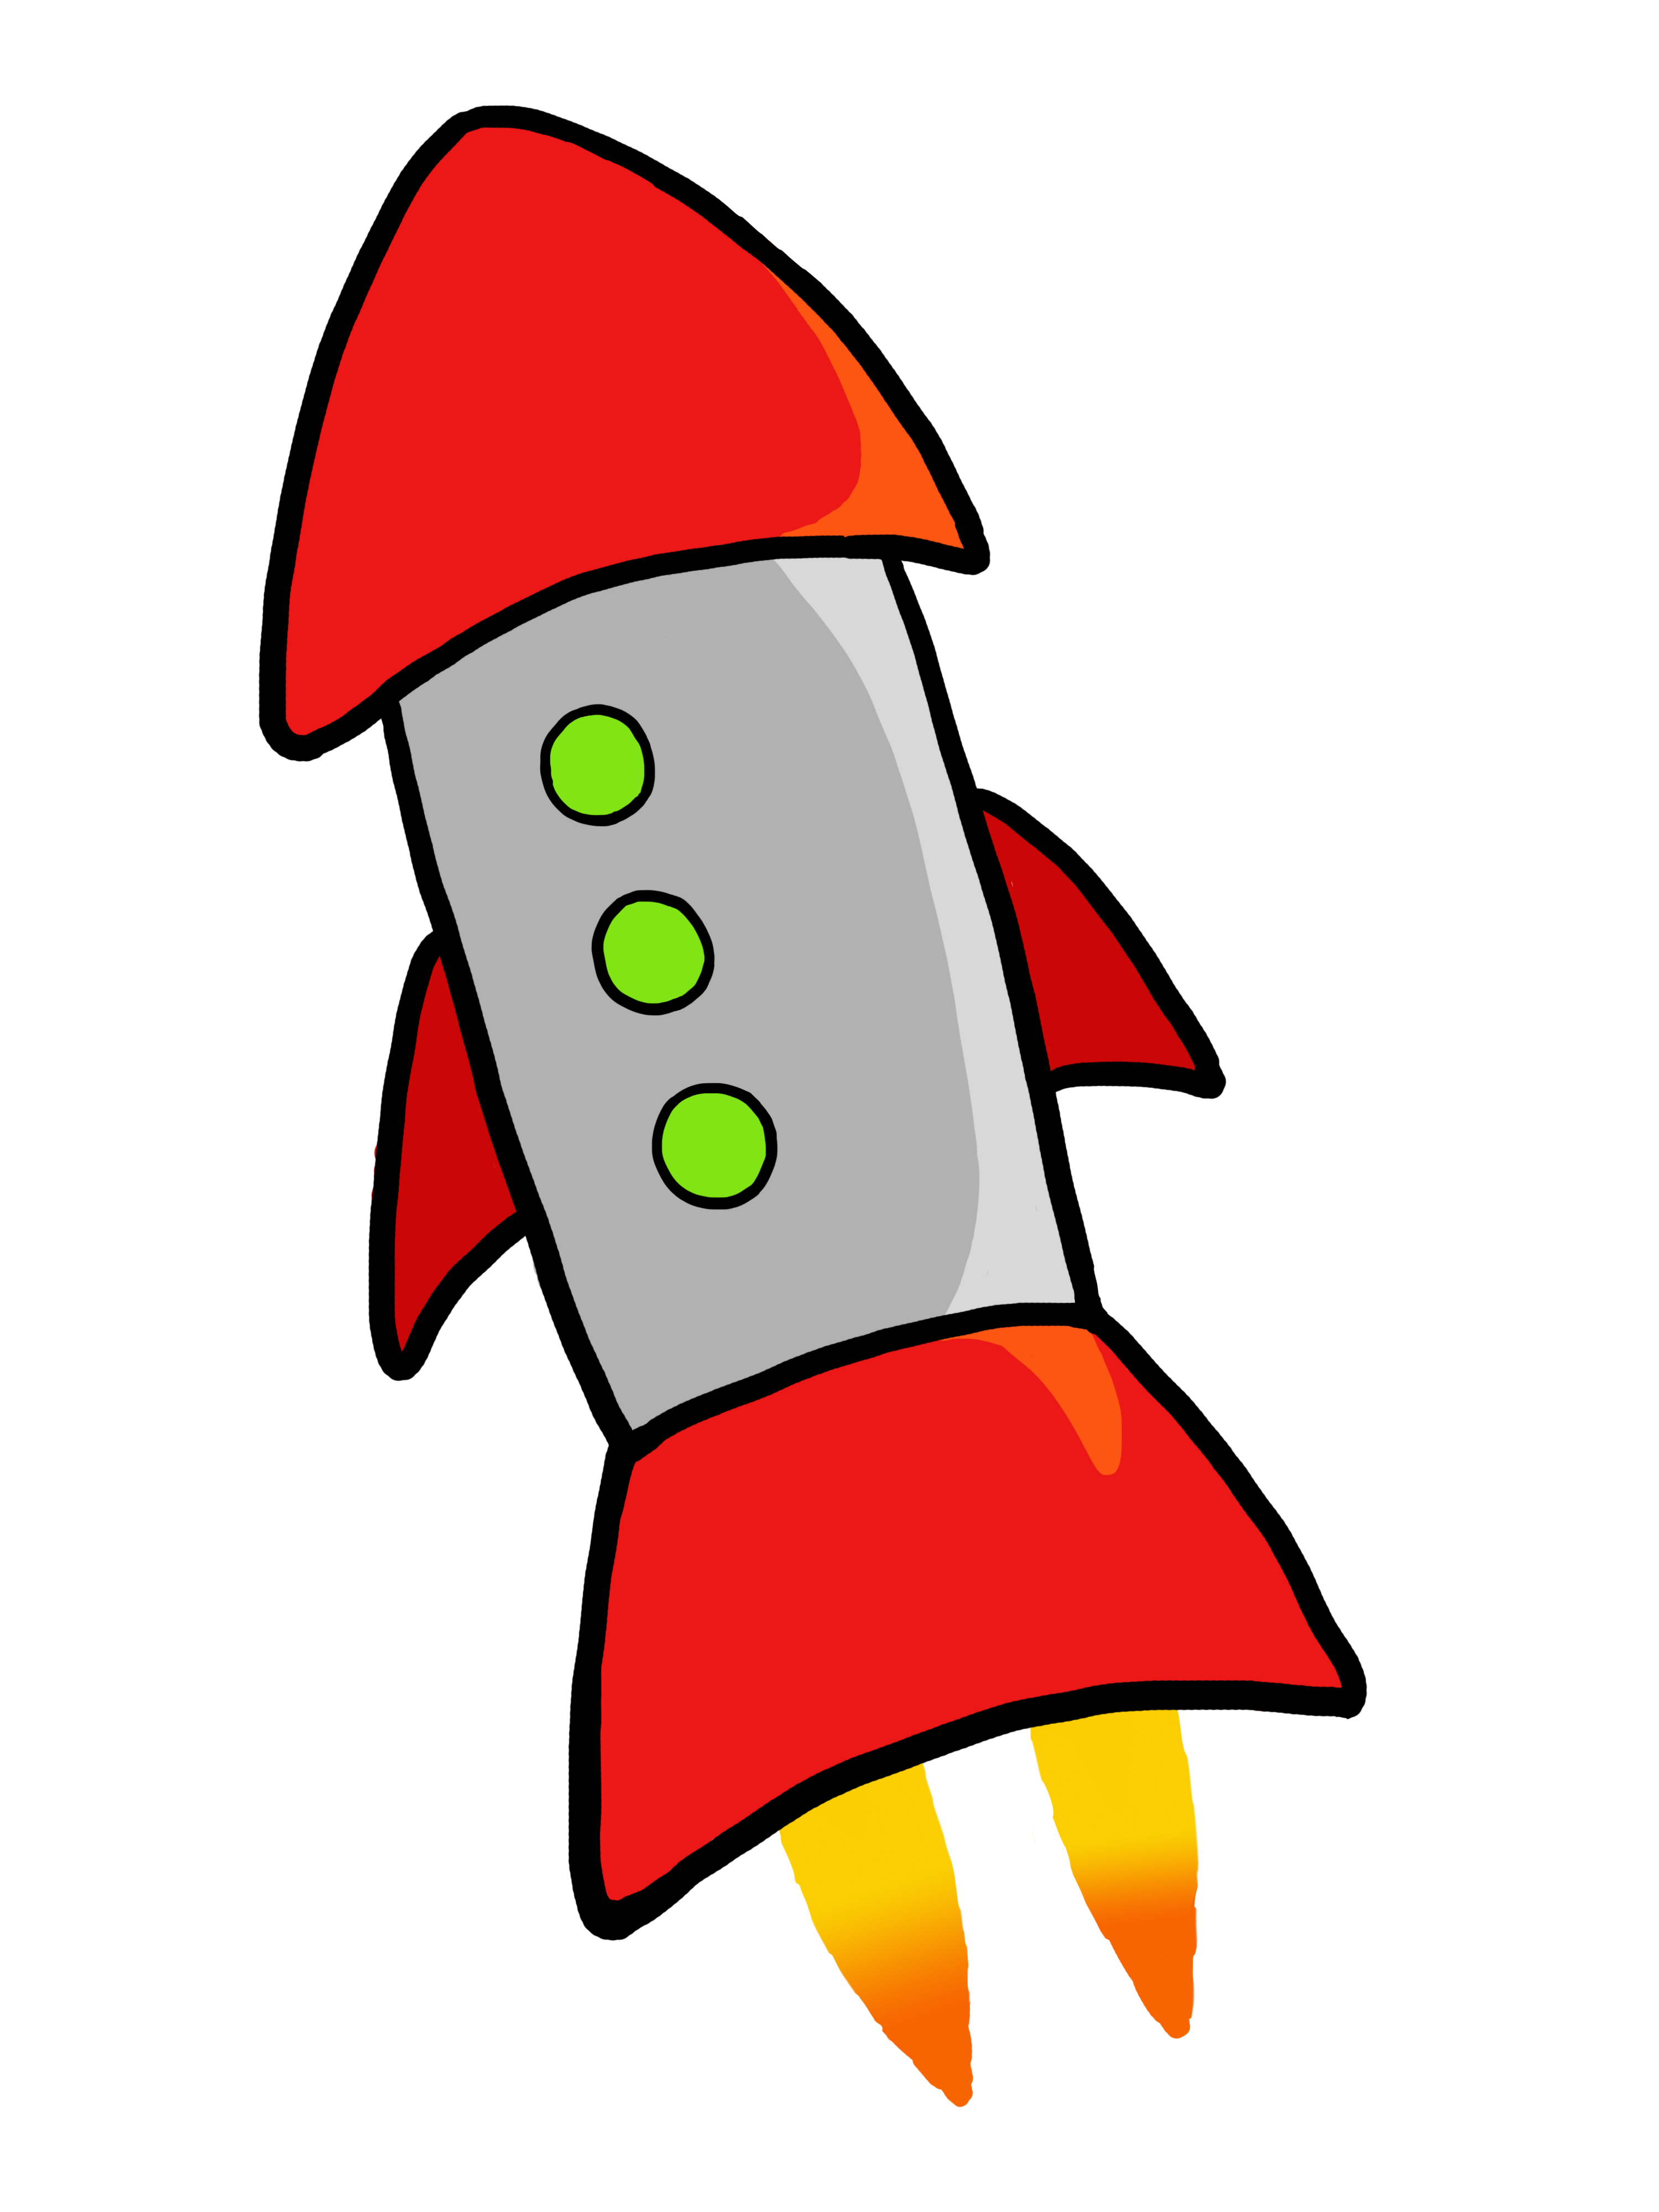 Rocket images clip art